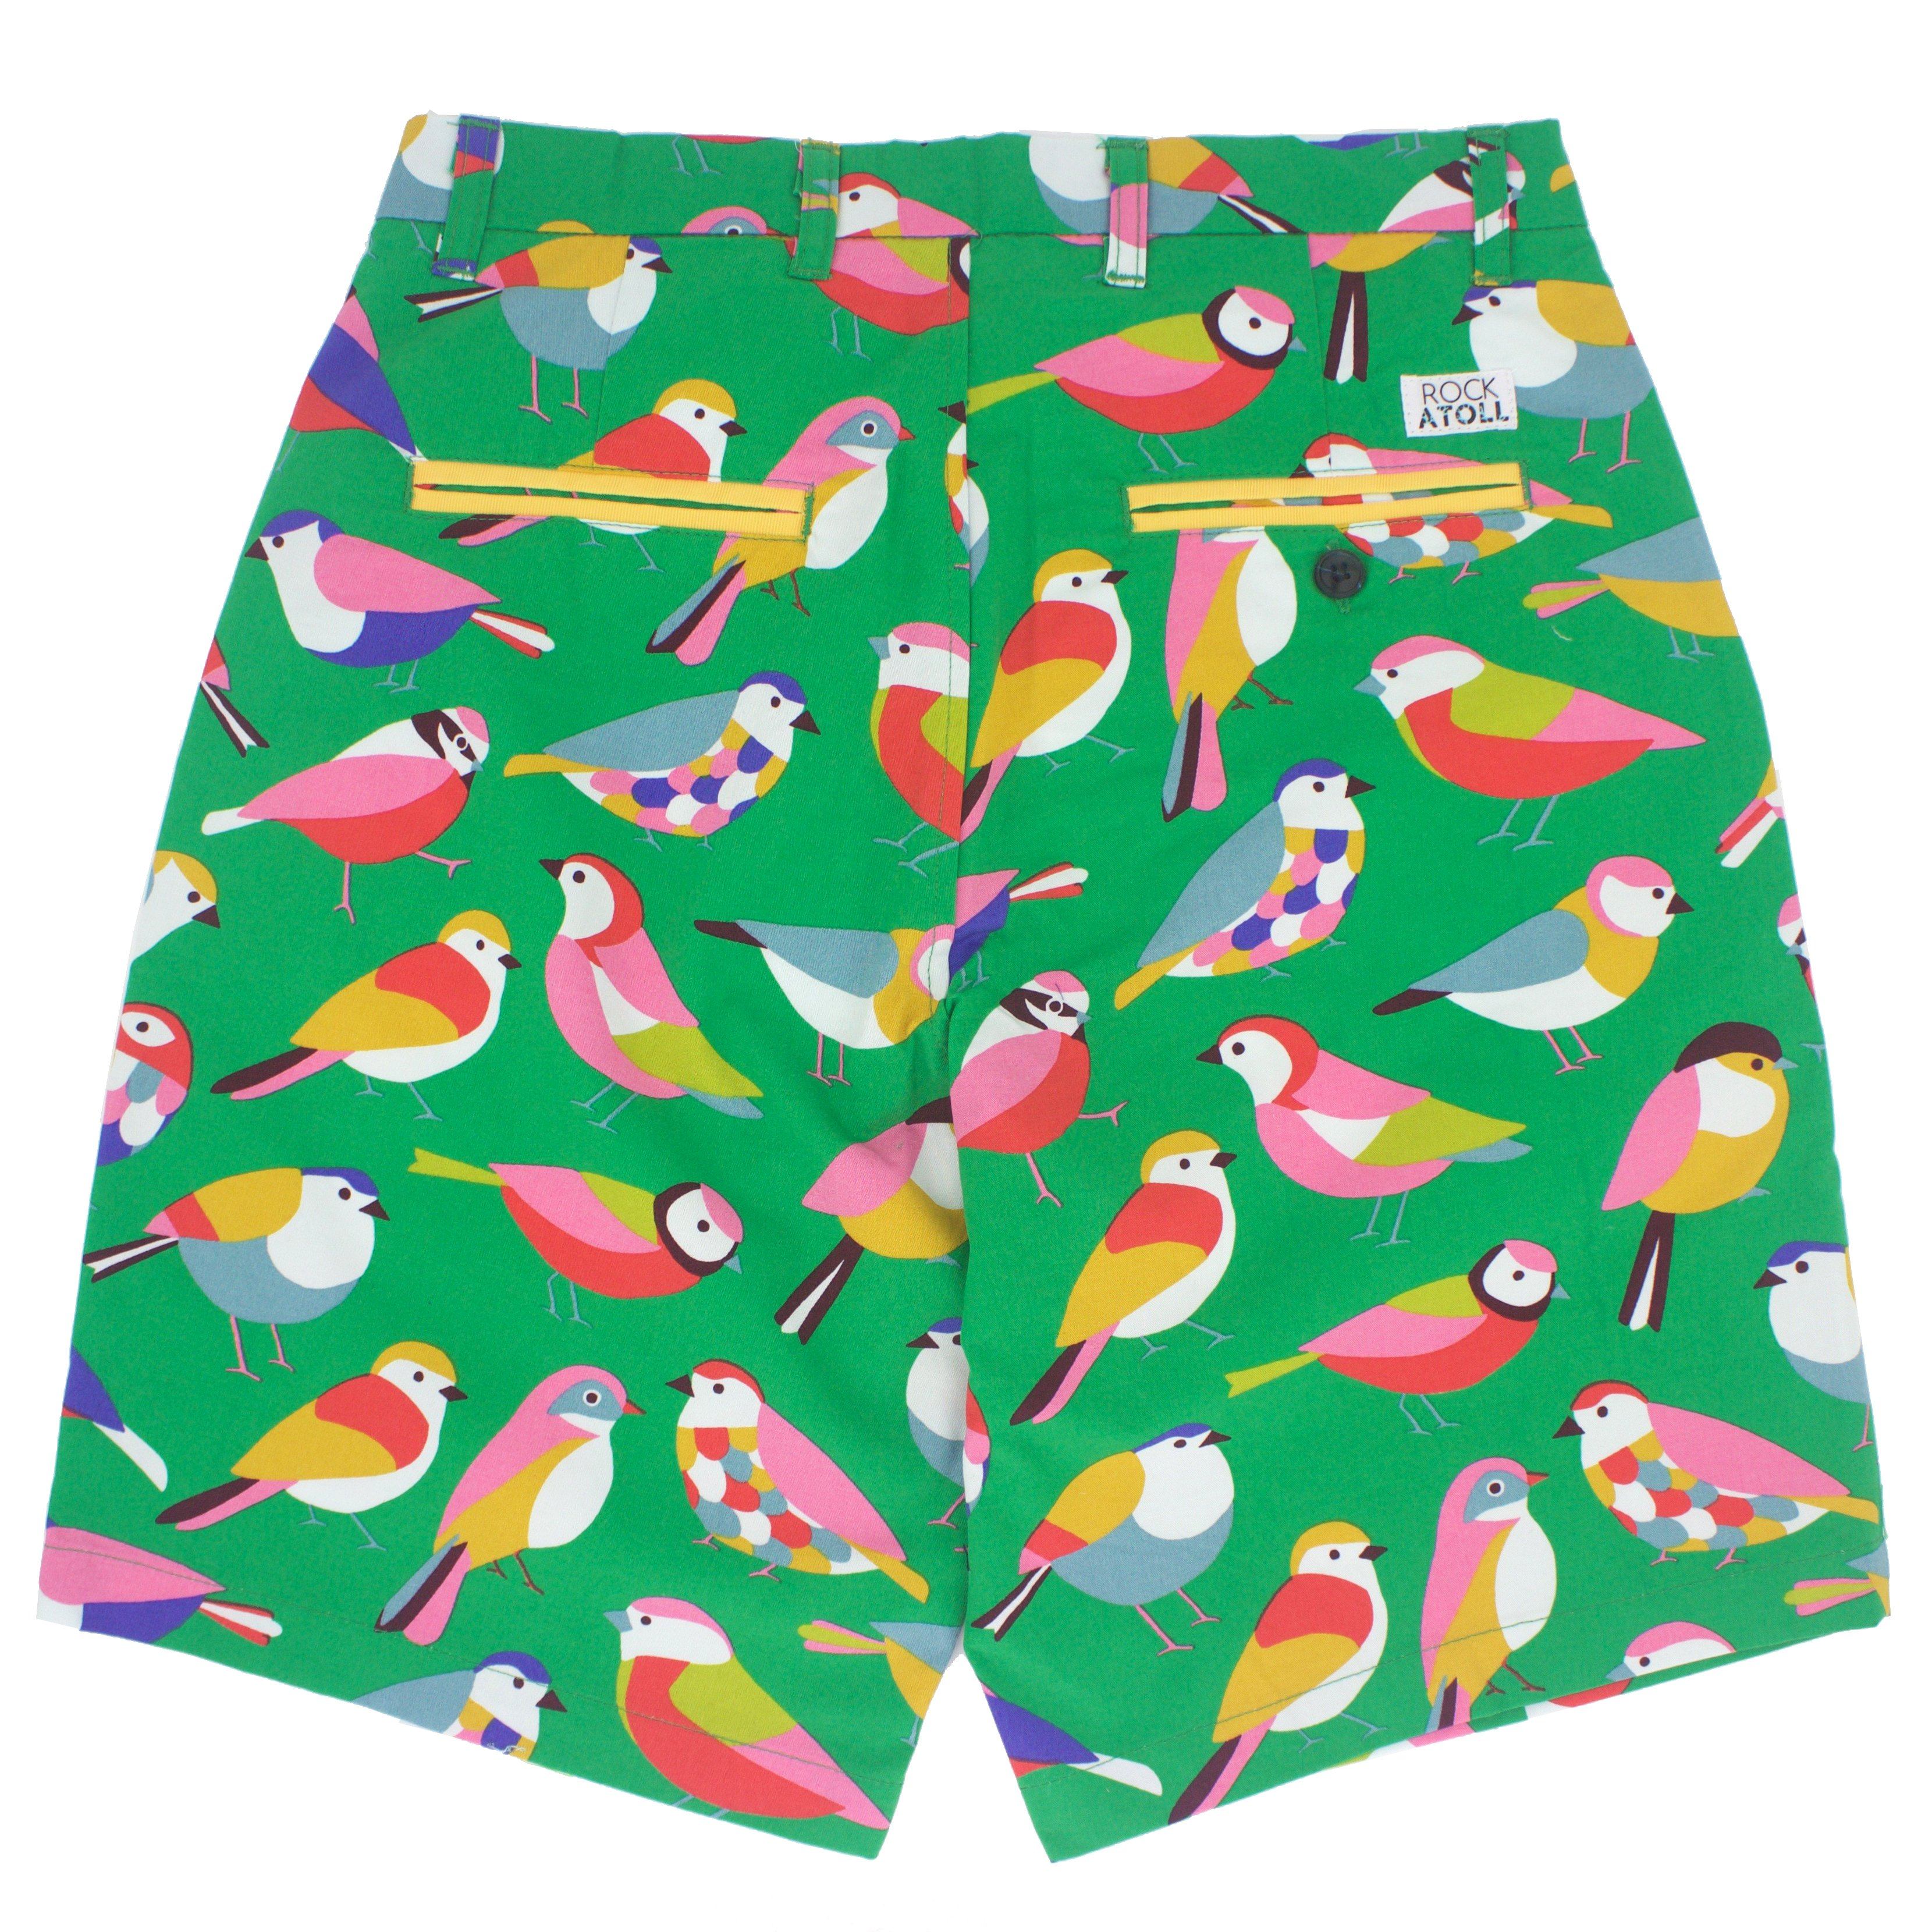 Crazy Colorful Shorts for Men